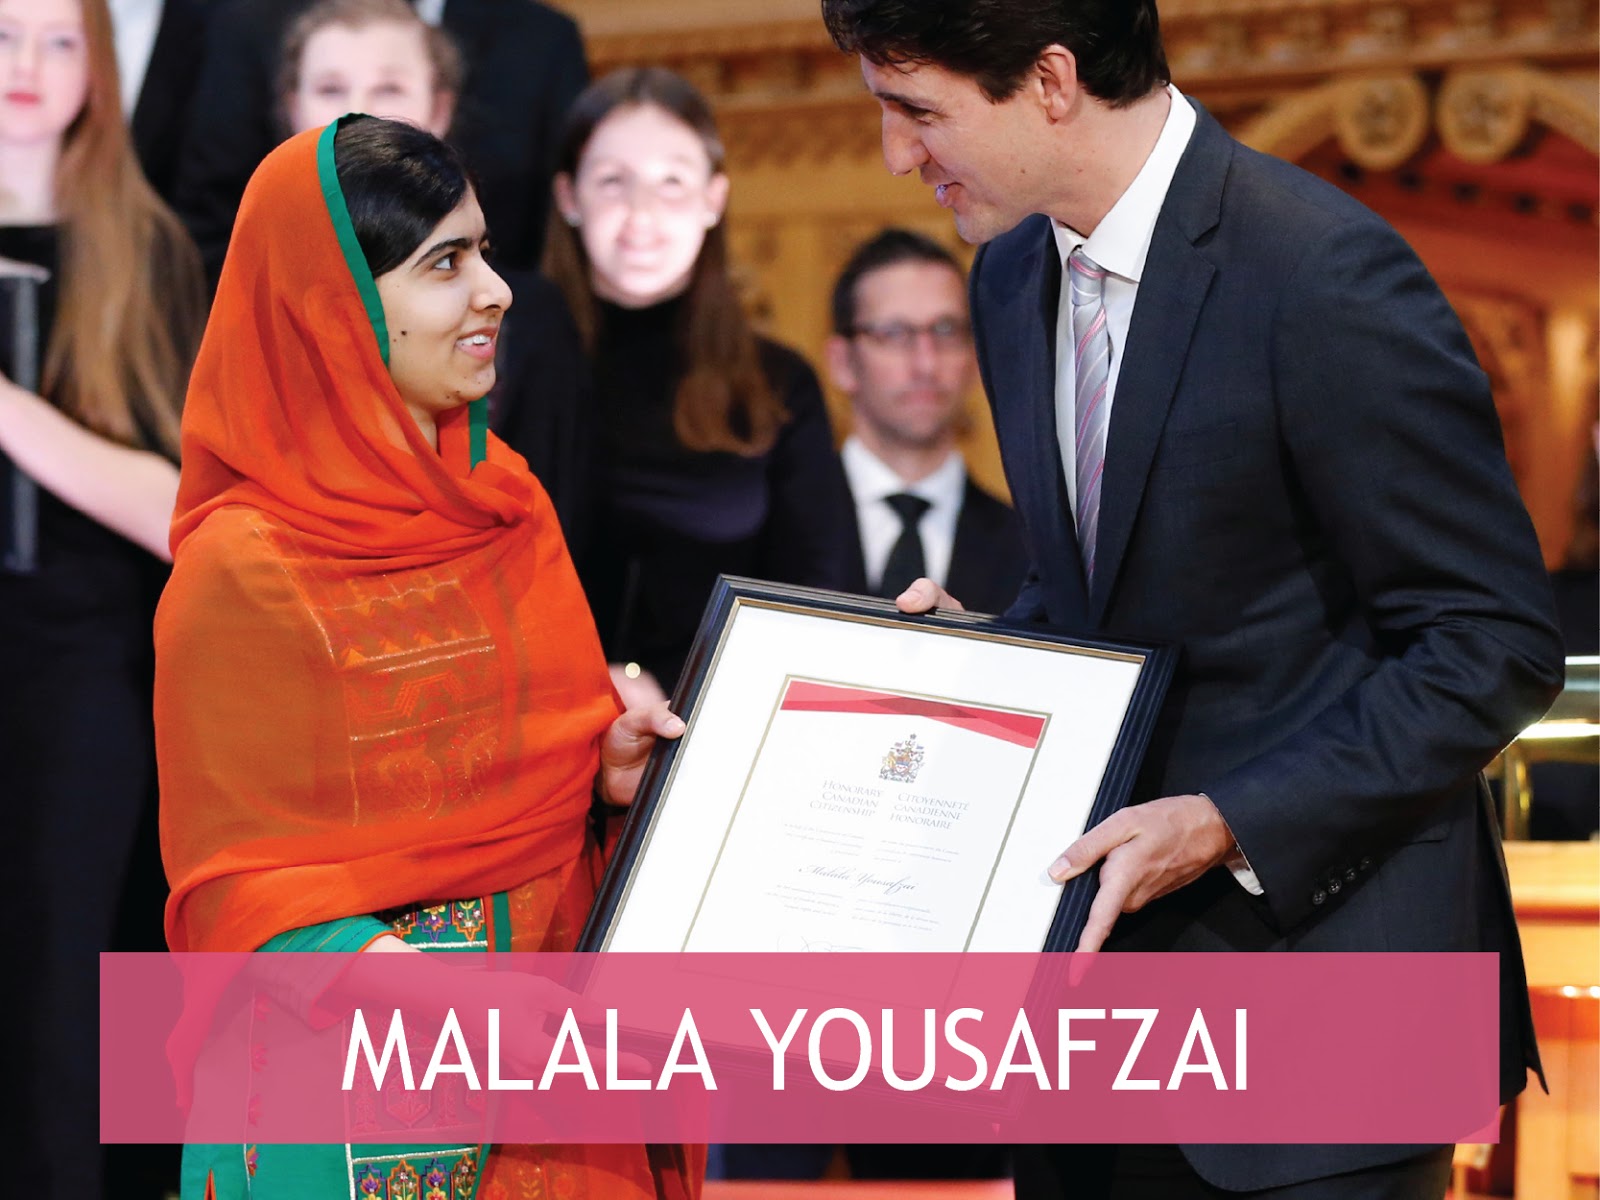 my role model malala yousafzai essay